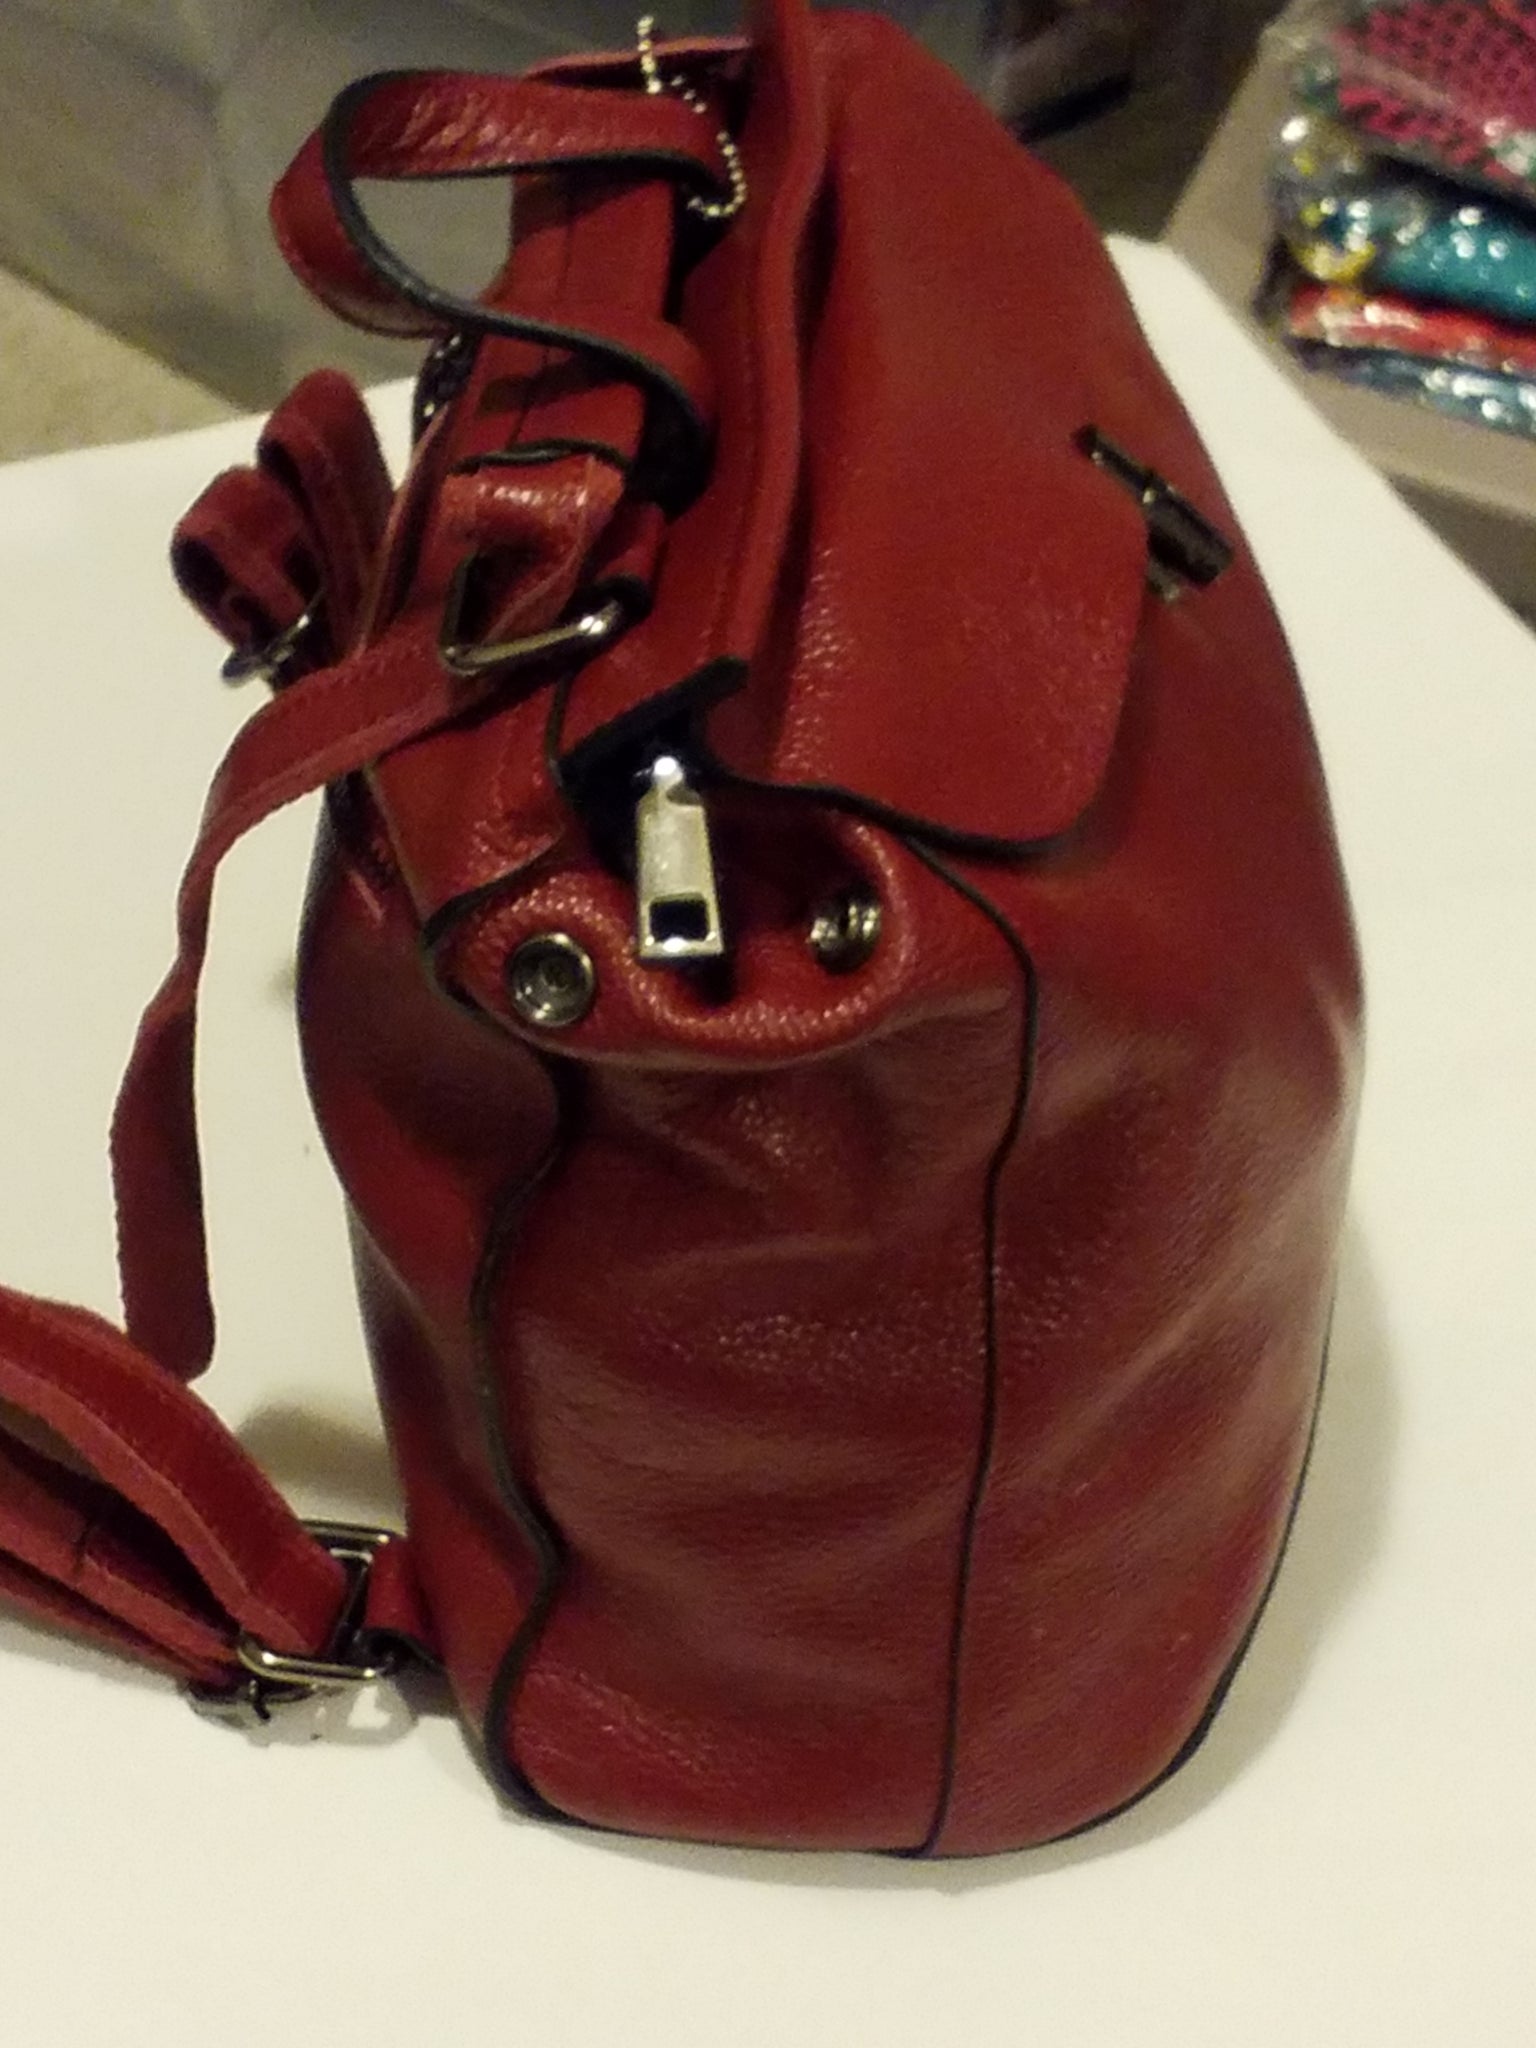 Hot Sales! Backpacks- Genuine Leather Backpacks and Accessories - ENUBEE